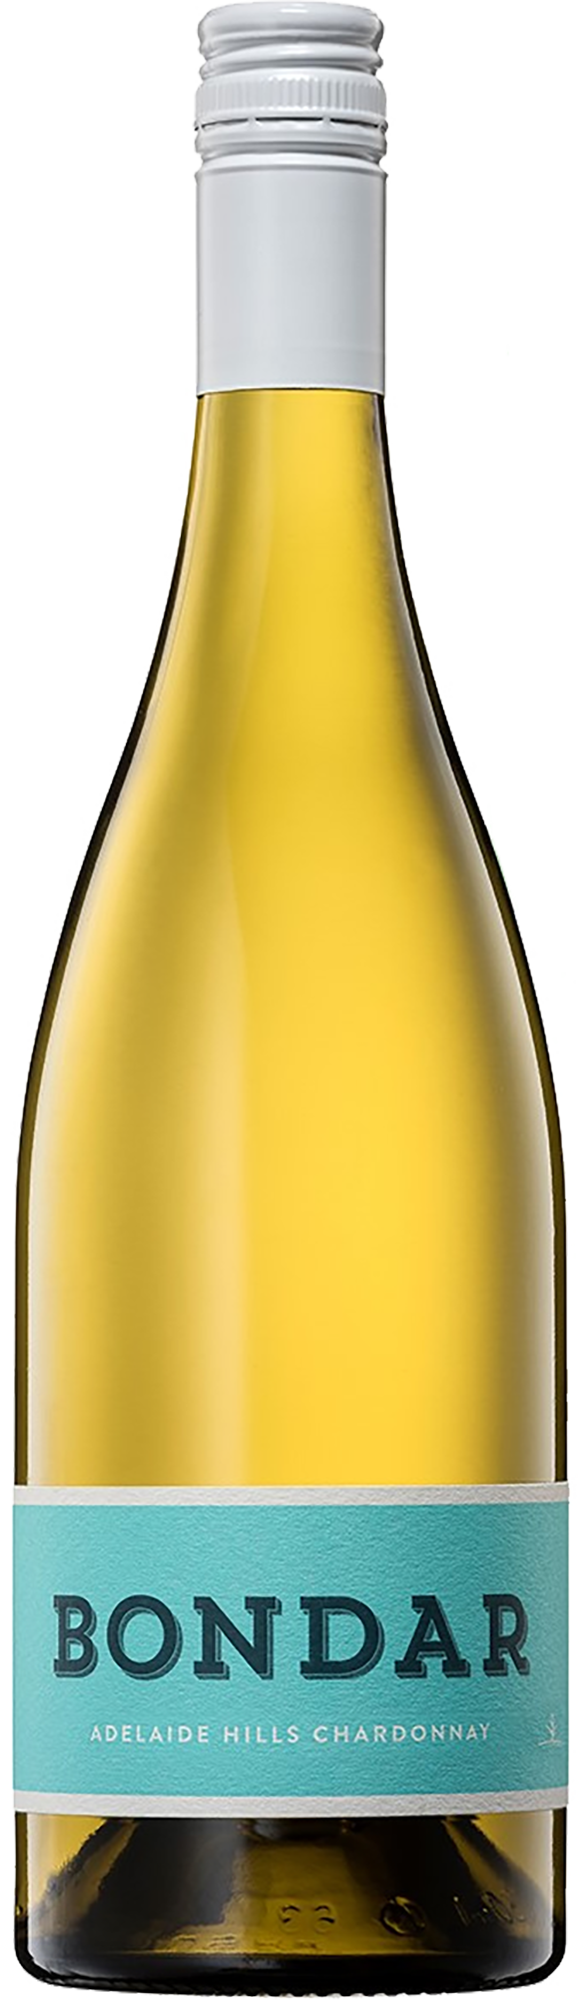 Bondar Adelaide Hills Chardonnay 2021